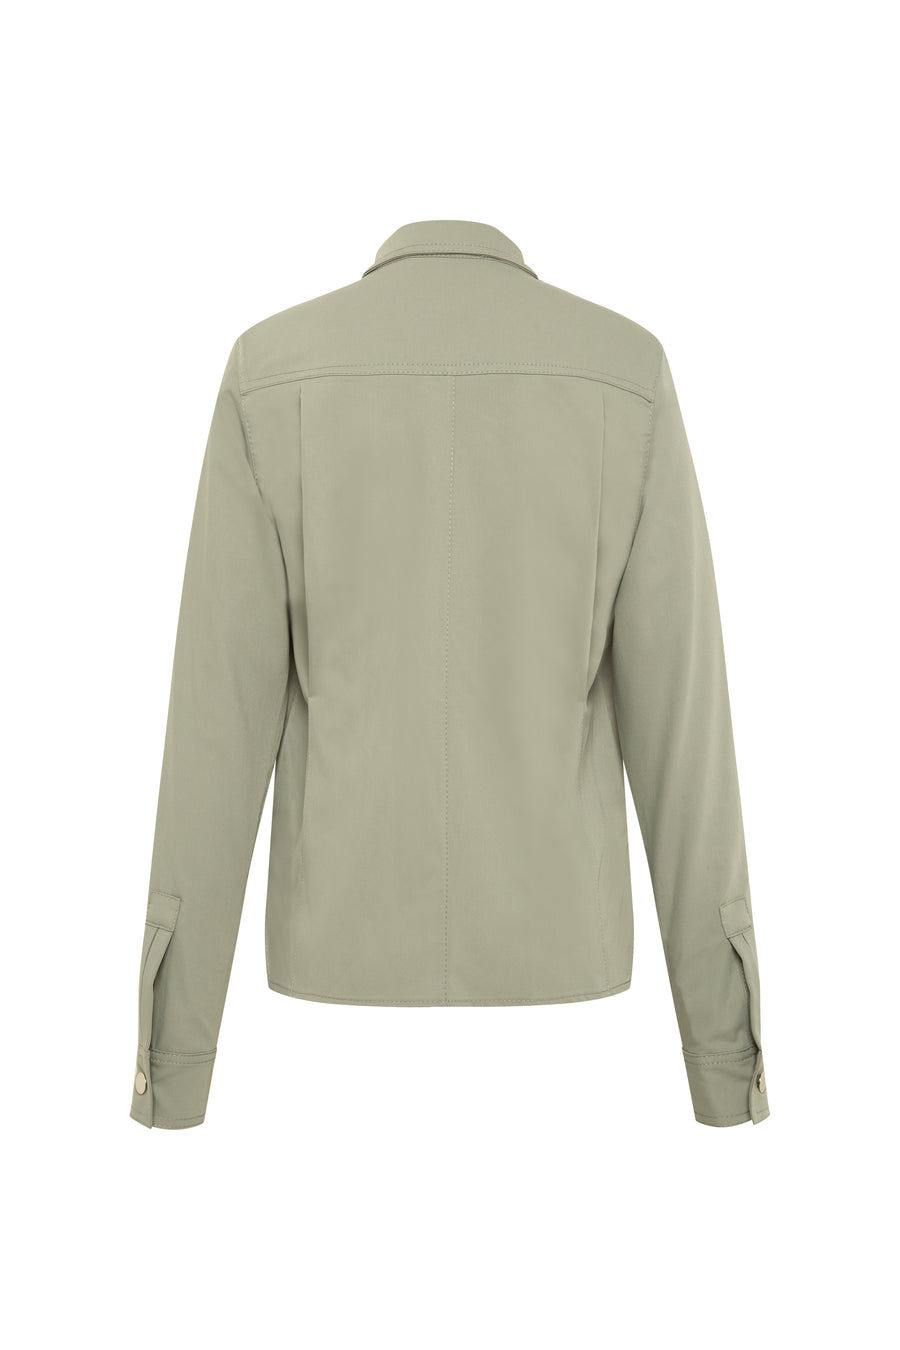 VINDA - Zip-up shirt jacket with patch pockets